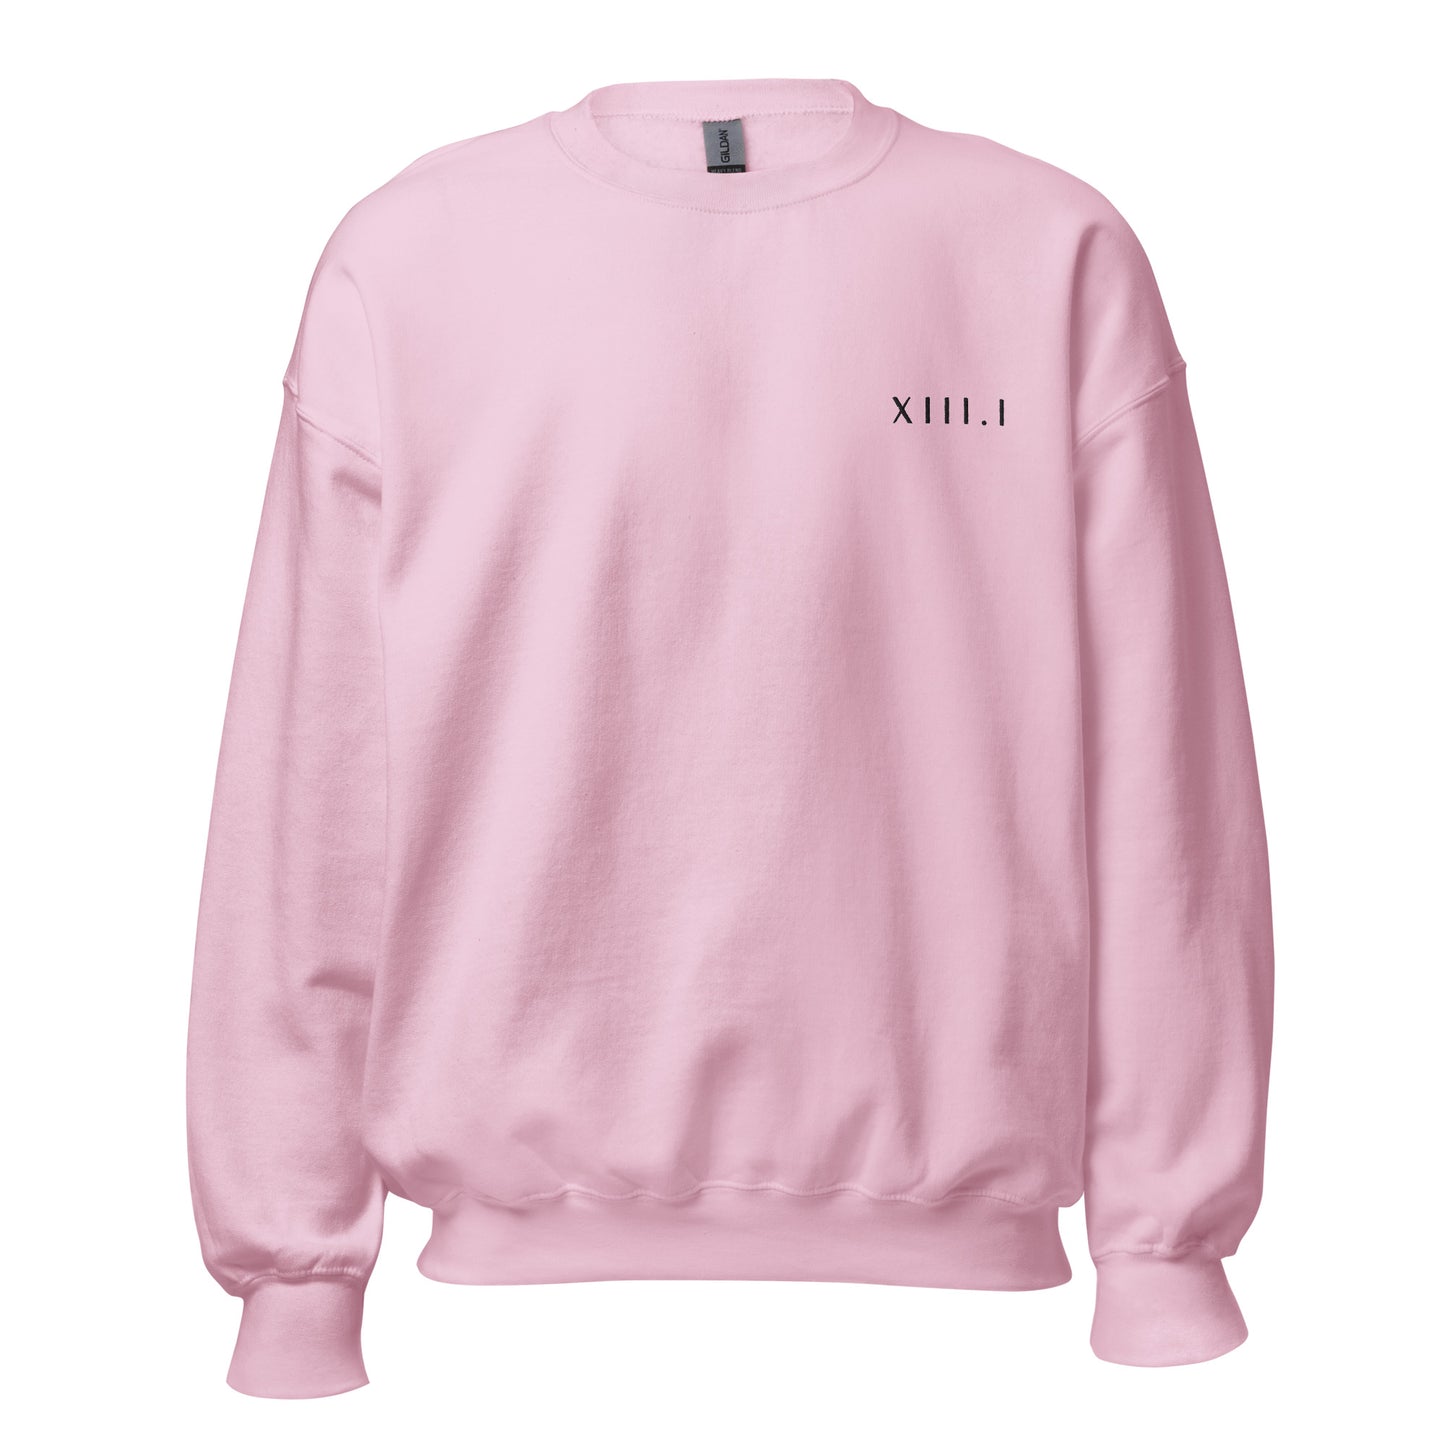 light pink unisex sweatshirt with XIII.I 13.1 half marathon in roman numerals embroidered in black writing